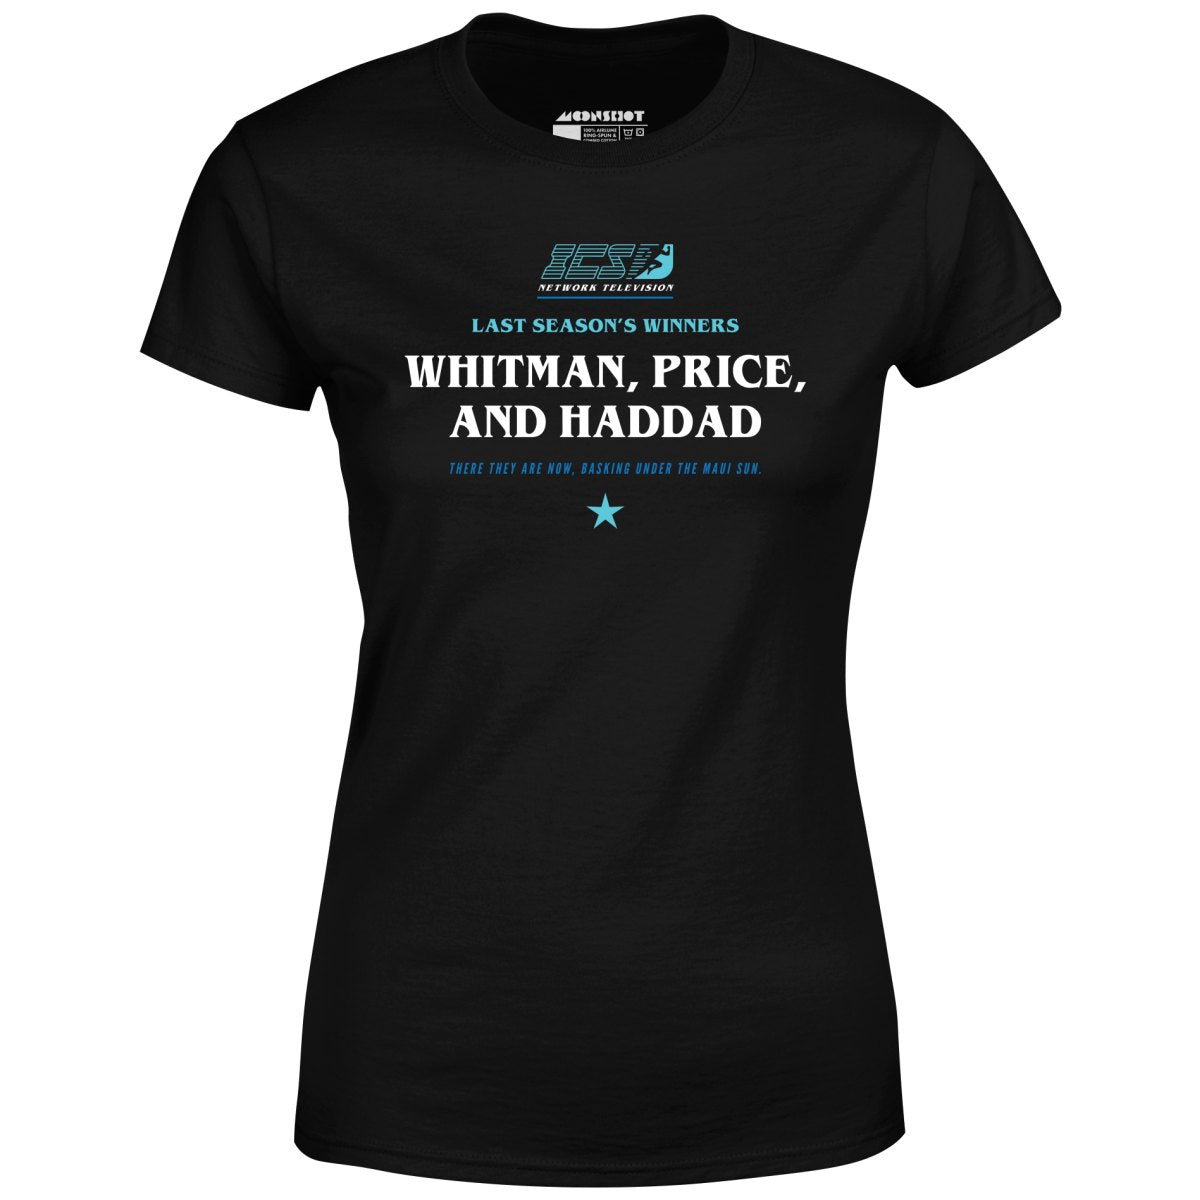 Running Man - Whitman, Price & Haddad - Women's T-Shirt